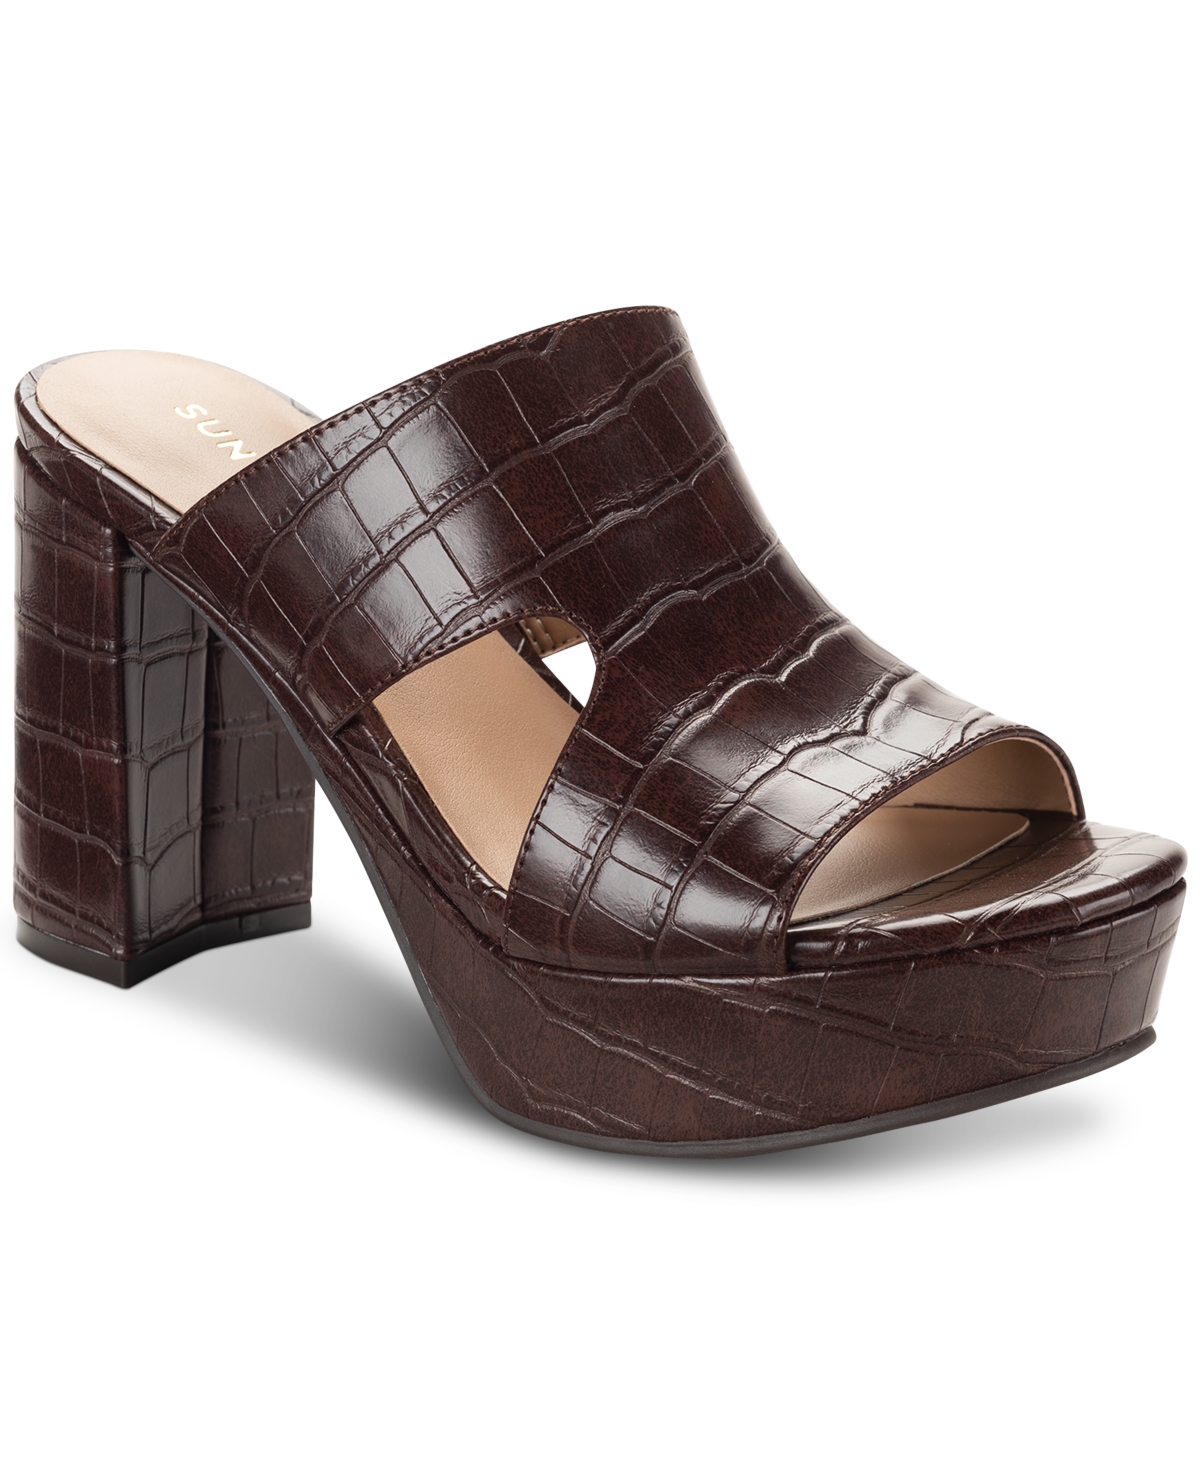 Dariaa Slip-On Platform Dress Sandals, Created for Macy's - Chocolate Croc